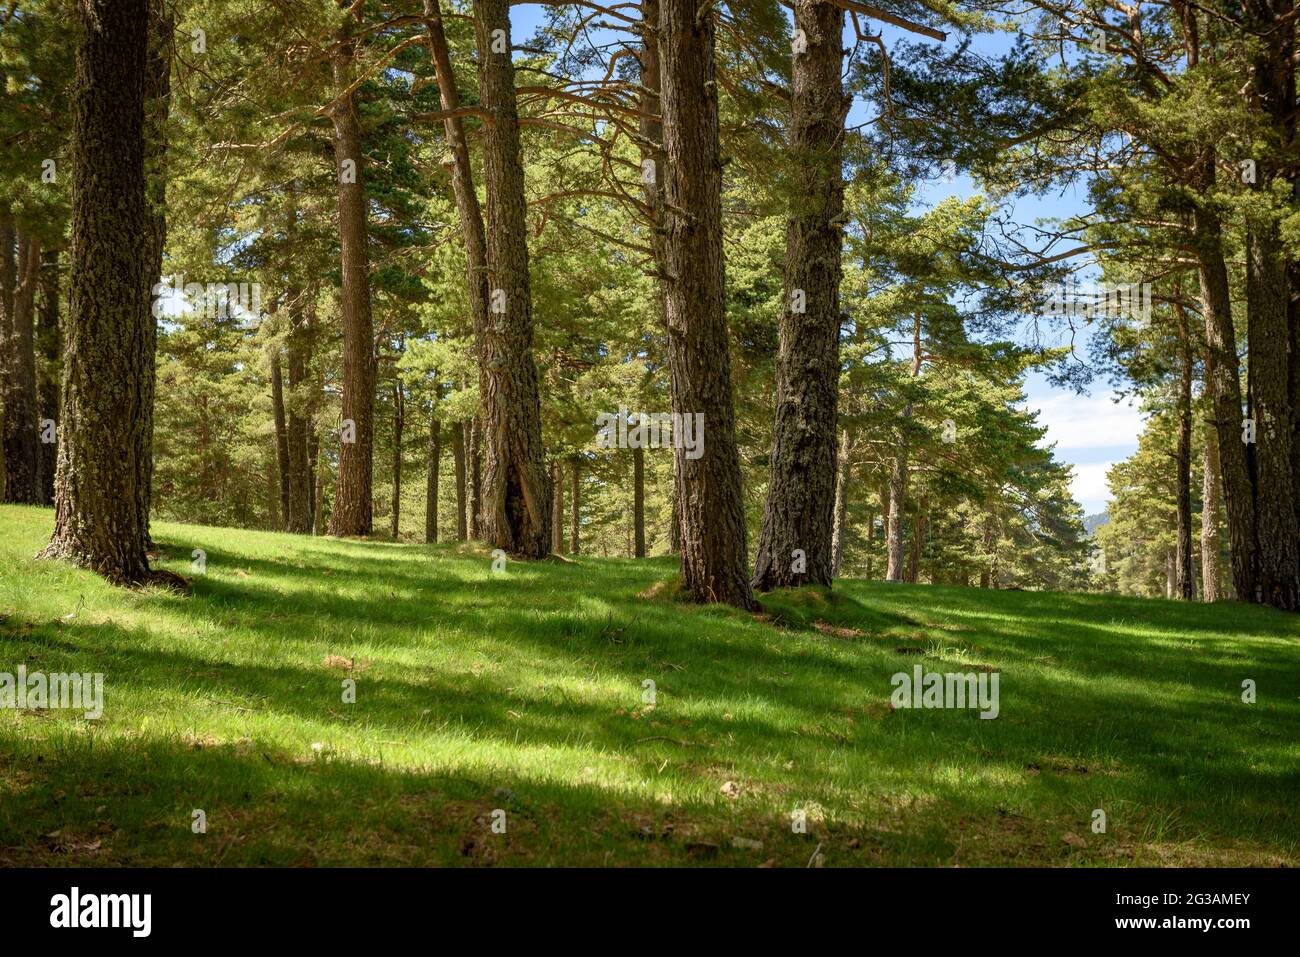 Foreste di pini e abeti a Sant Joan de l'ERM (Parco Naturale Alt Pirineu, Lleida, Catalogna, Spagna, Pirenei) ESP: Bosques de pinos y abetos en el Pirineo Foto Stock